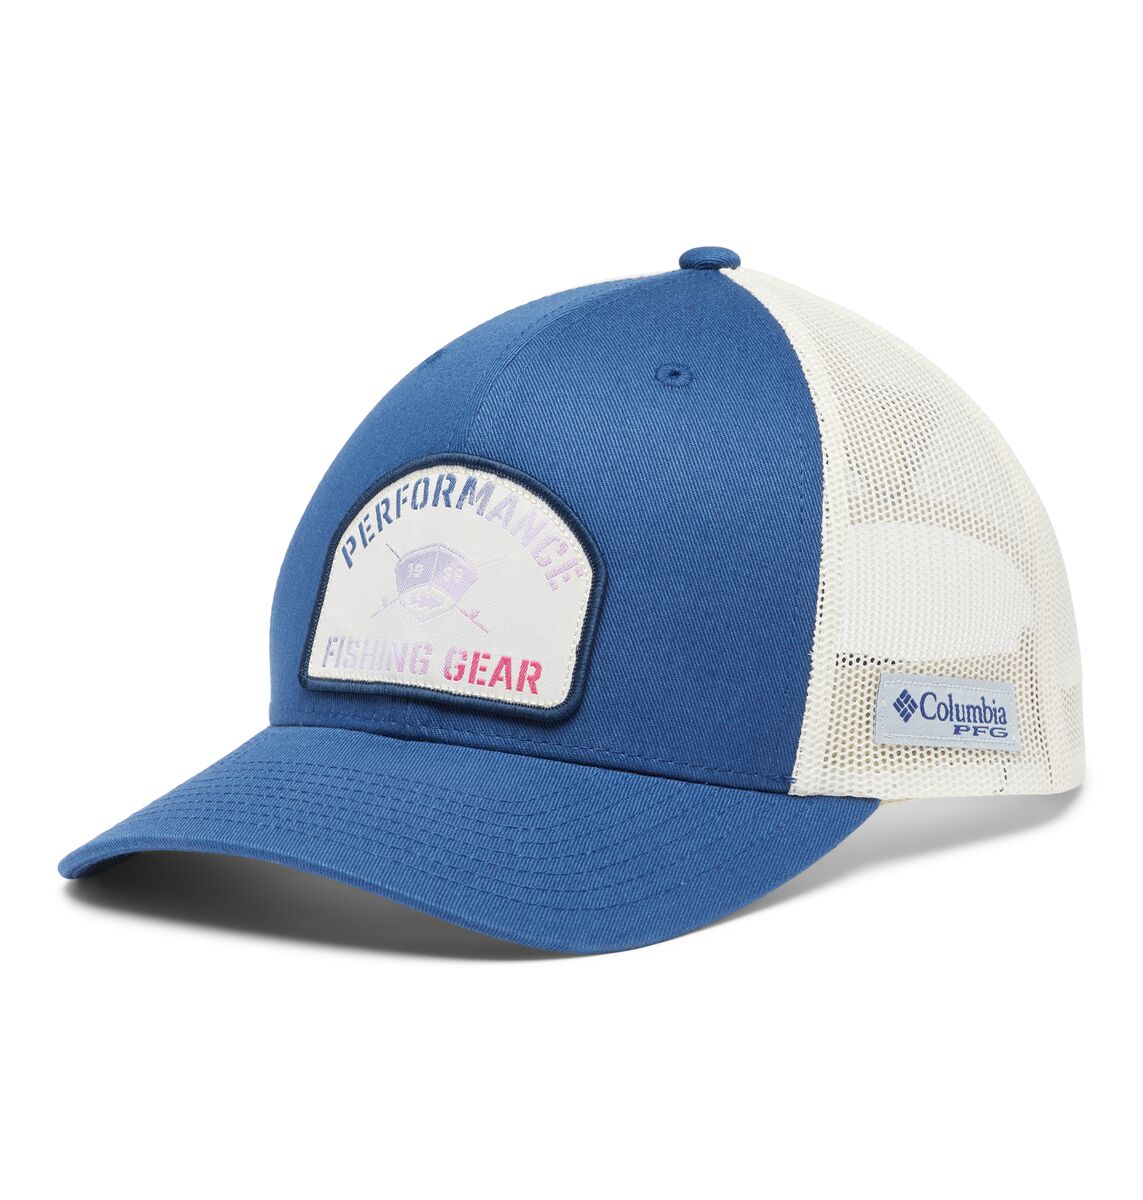 Men's High Crown PFG Patch Mesh Snapback Hat